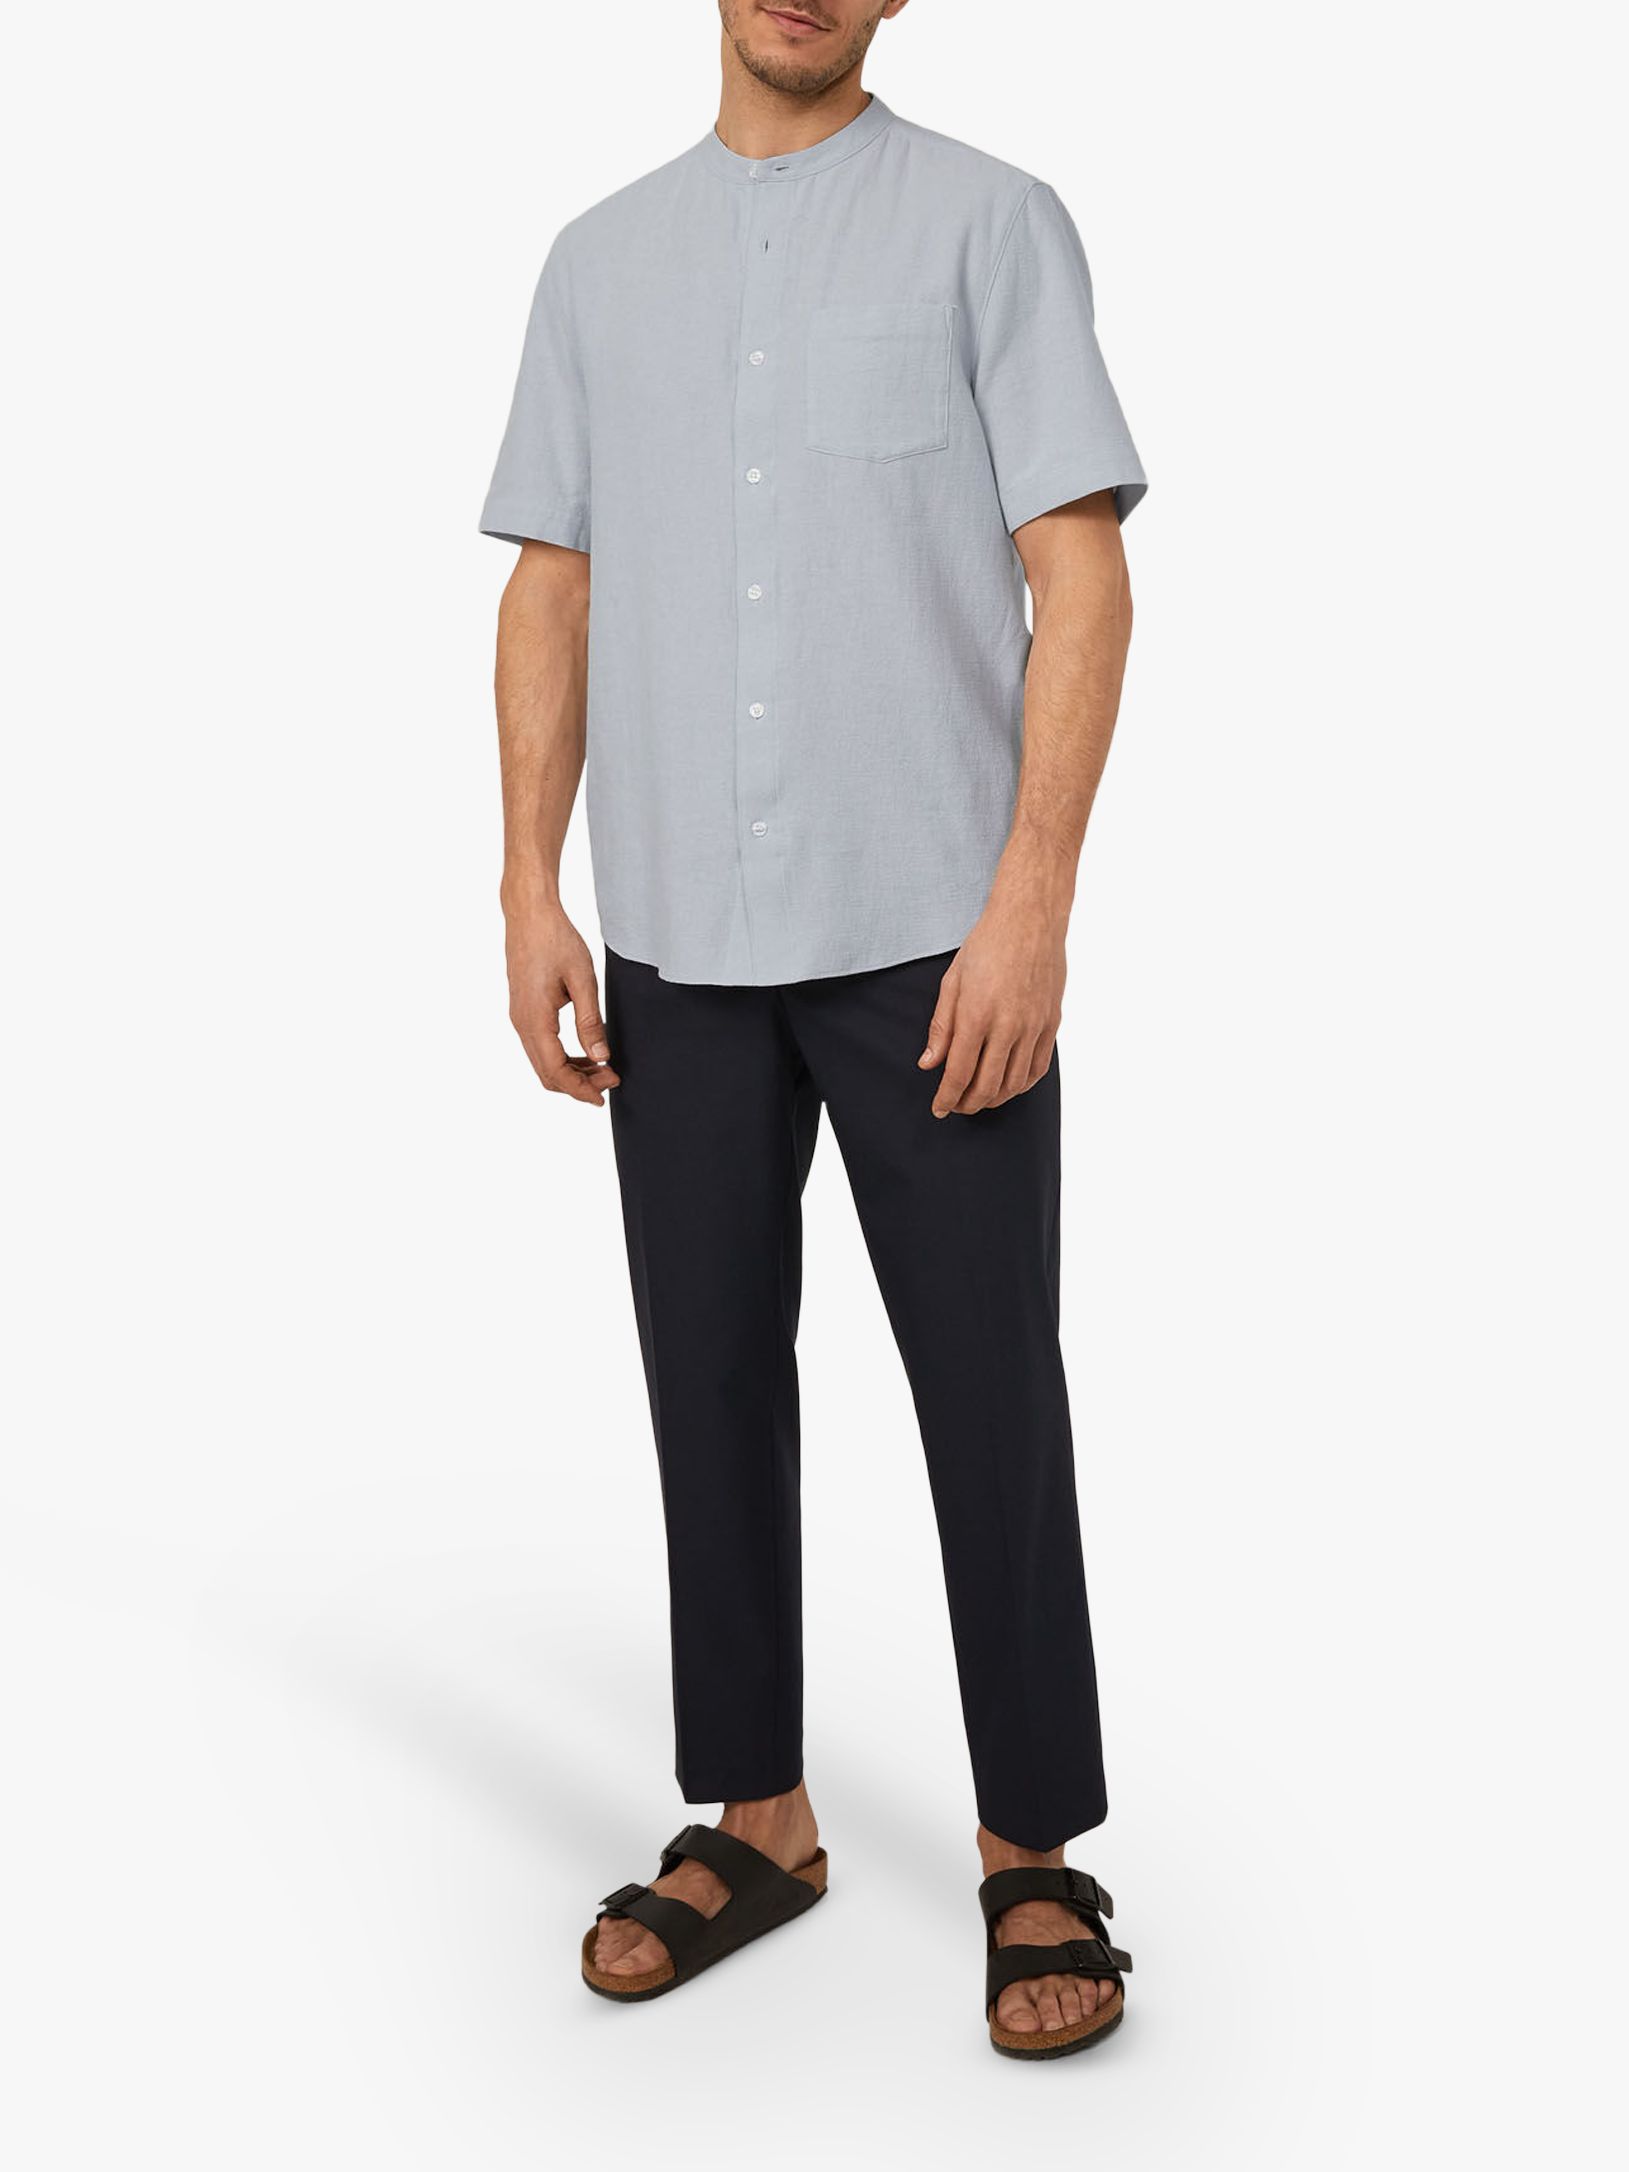 Warehouse Organic Cotton Grandad Collar Shirt, Light Blue, S